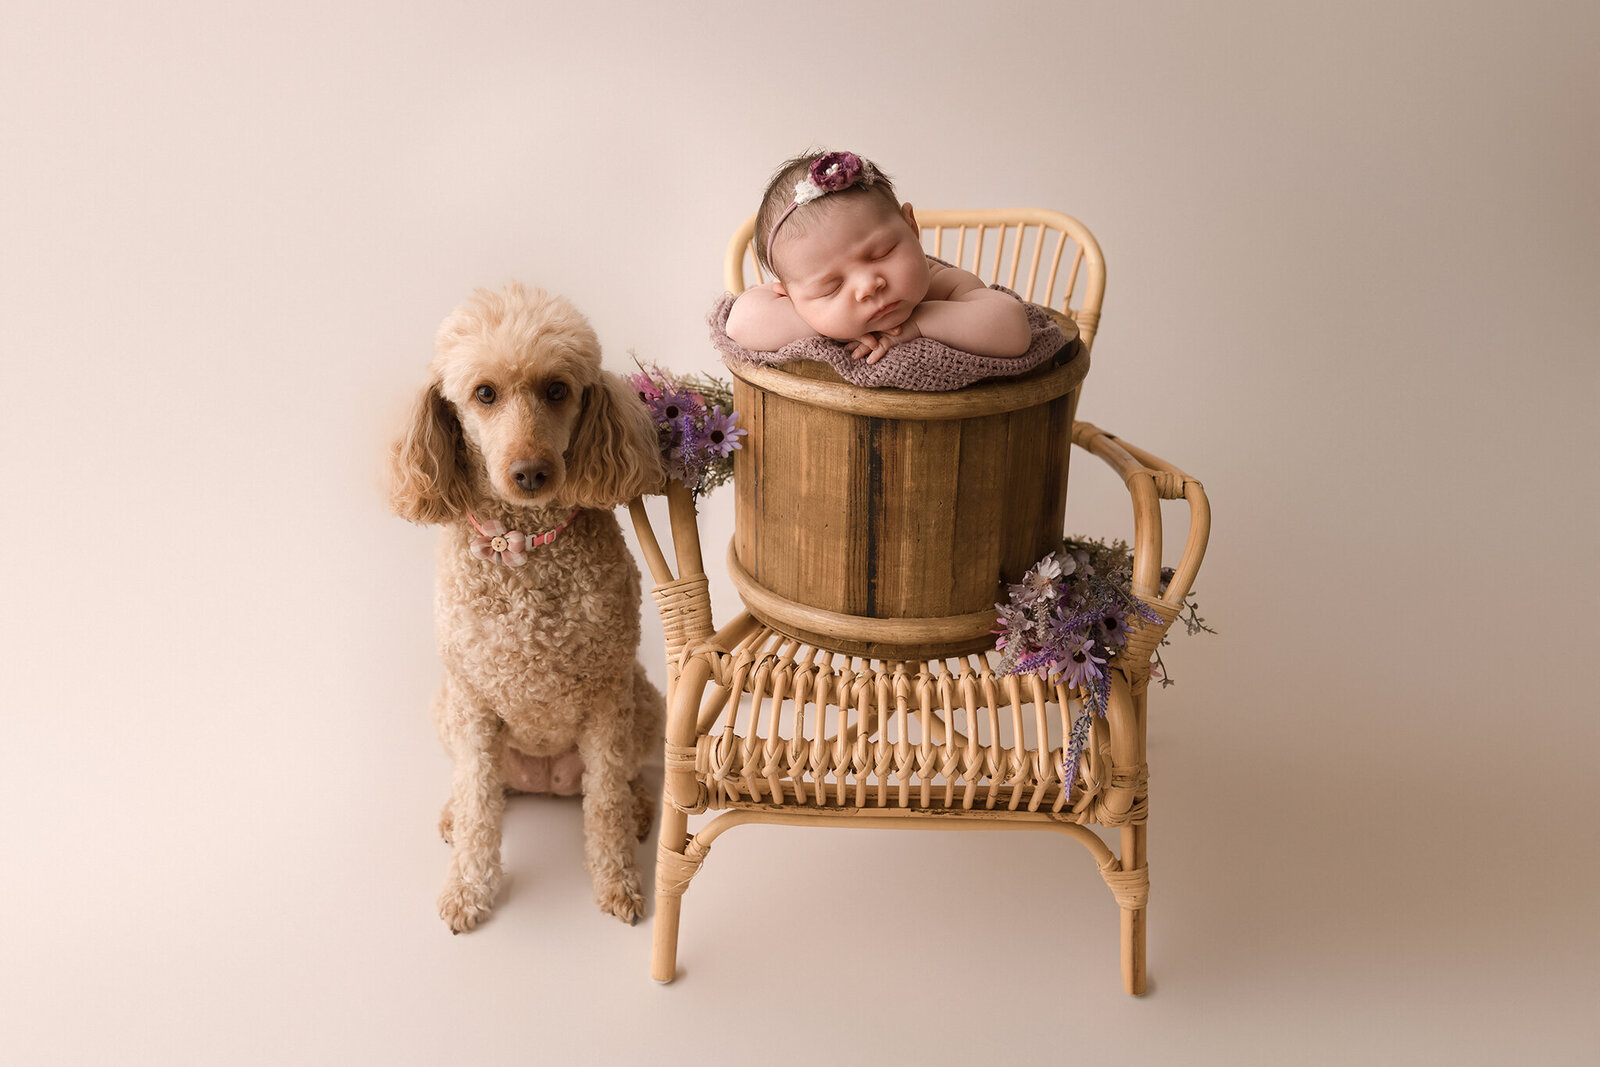 Melbourne's Little Angel: Aurora Joy Newborn Photography's Ethereal Capture